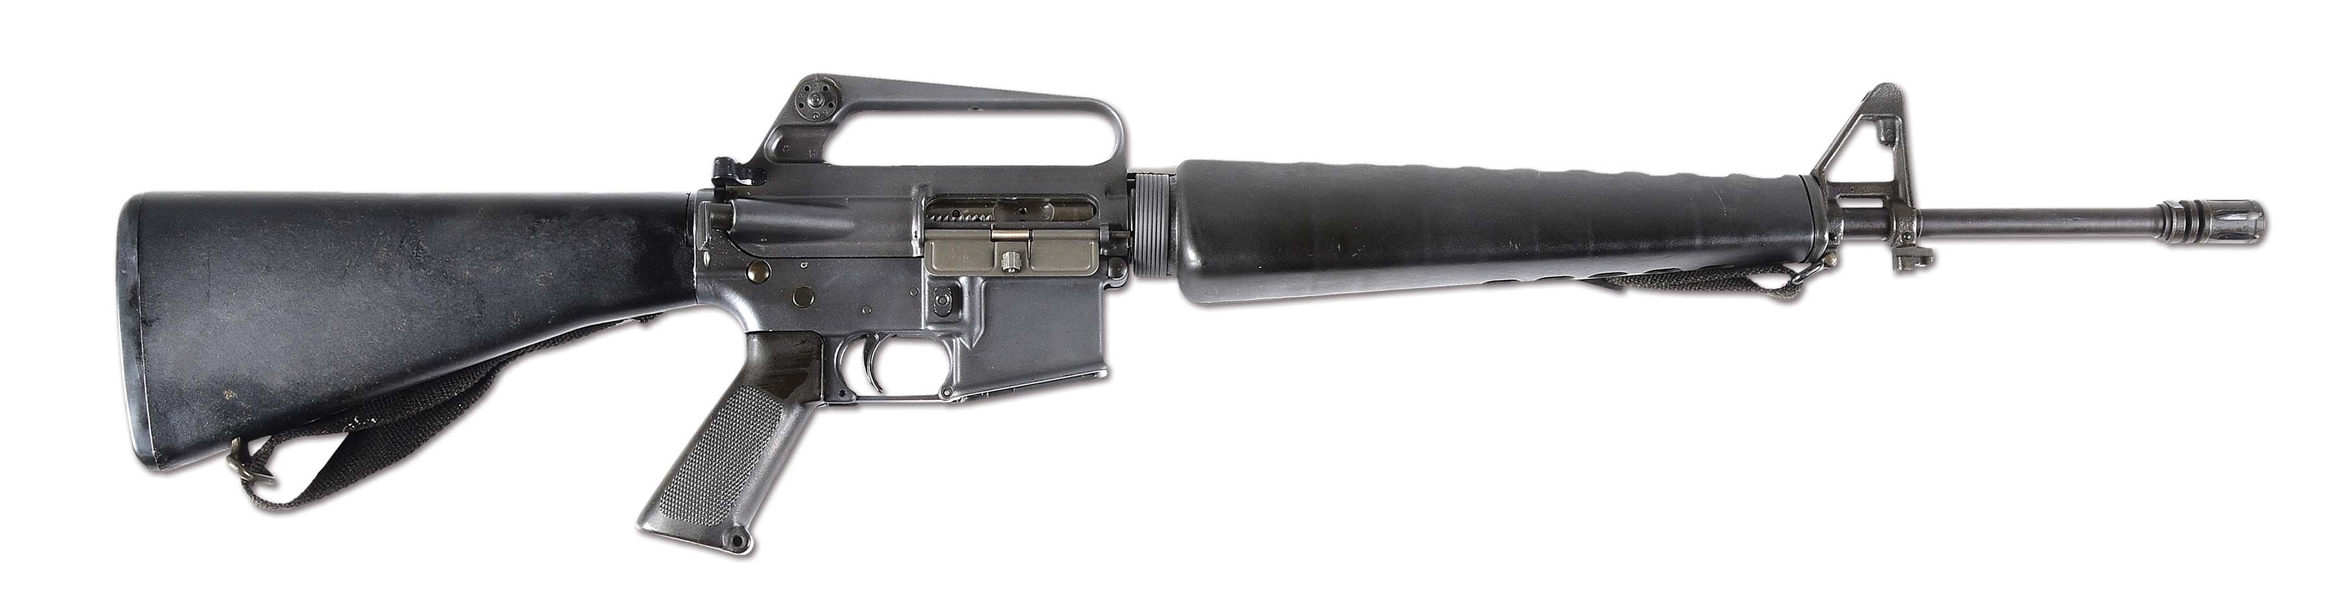 (N) NEAR NEW COLT M16A1 SELECT FIRE MACHINE GUN (FULLY TRANSFERABLE).